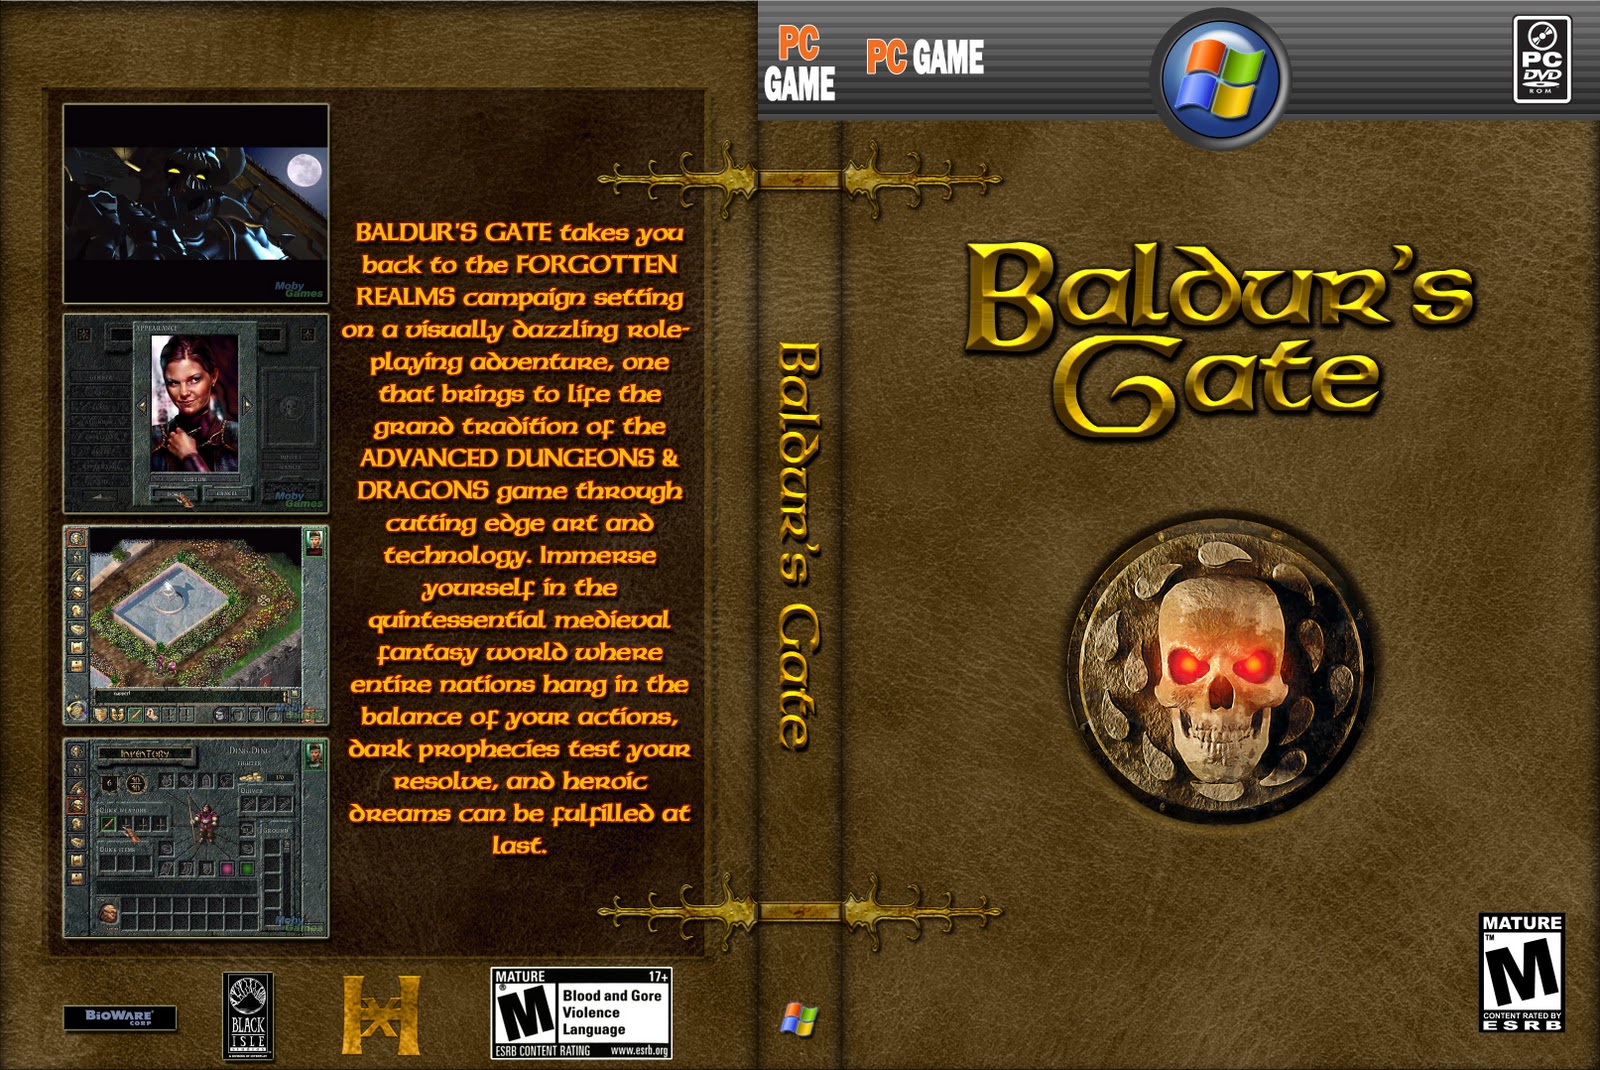 Baldurs gate items. Baldur's Gate 1998 обложка. Baldur's Gate обложка ps1. Болдерсгейт 3 обложка. Балдурс гейт 3 обложка.